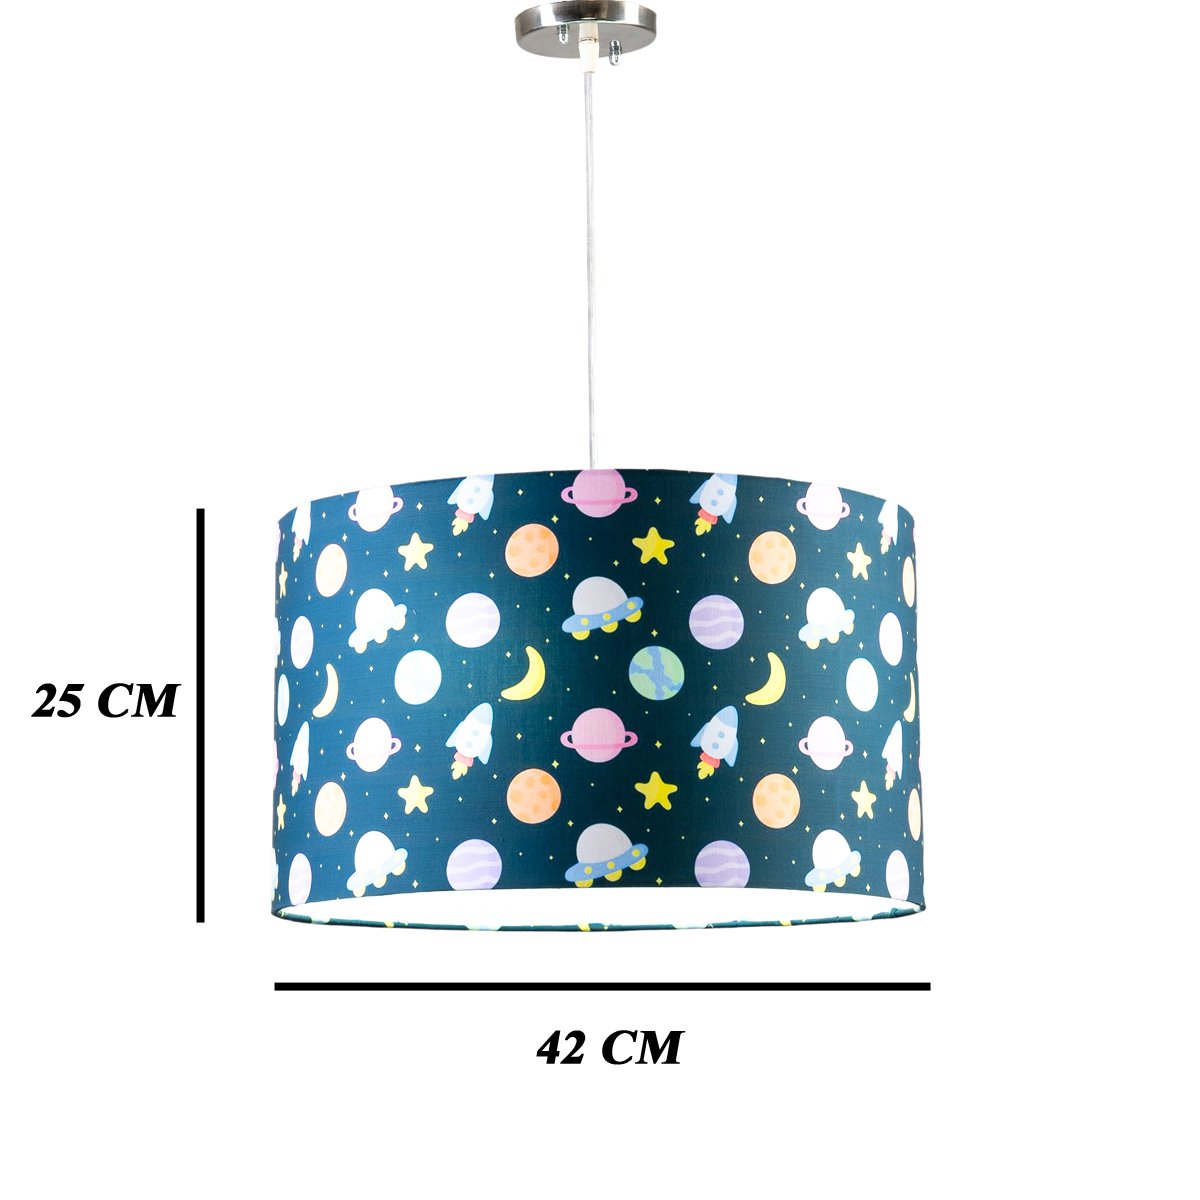 Ceiling lamp - mnta016